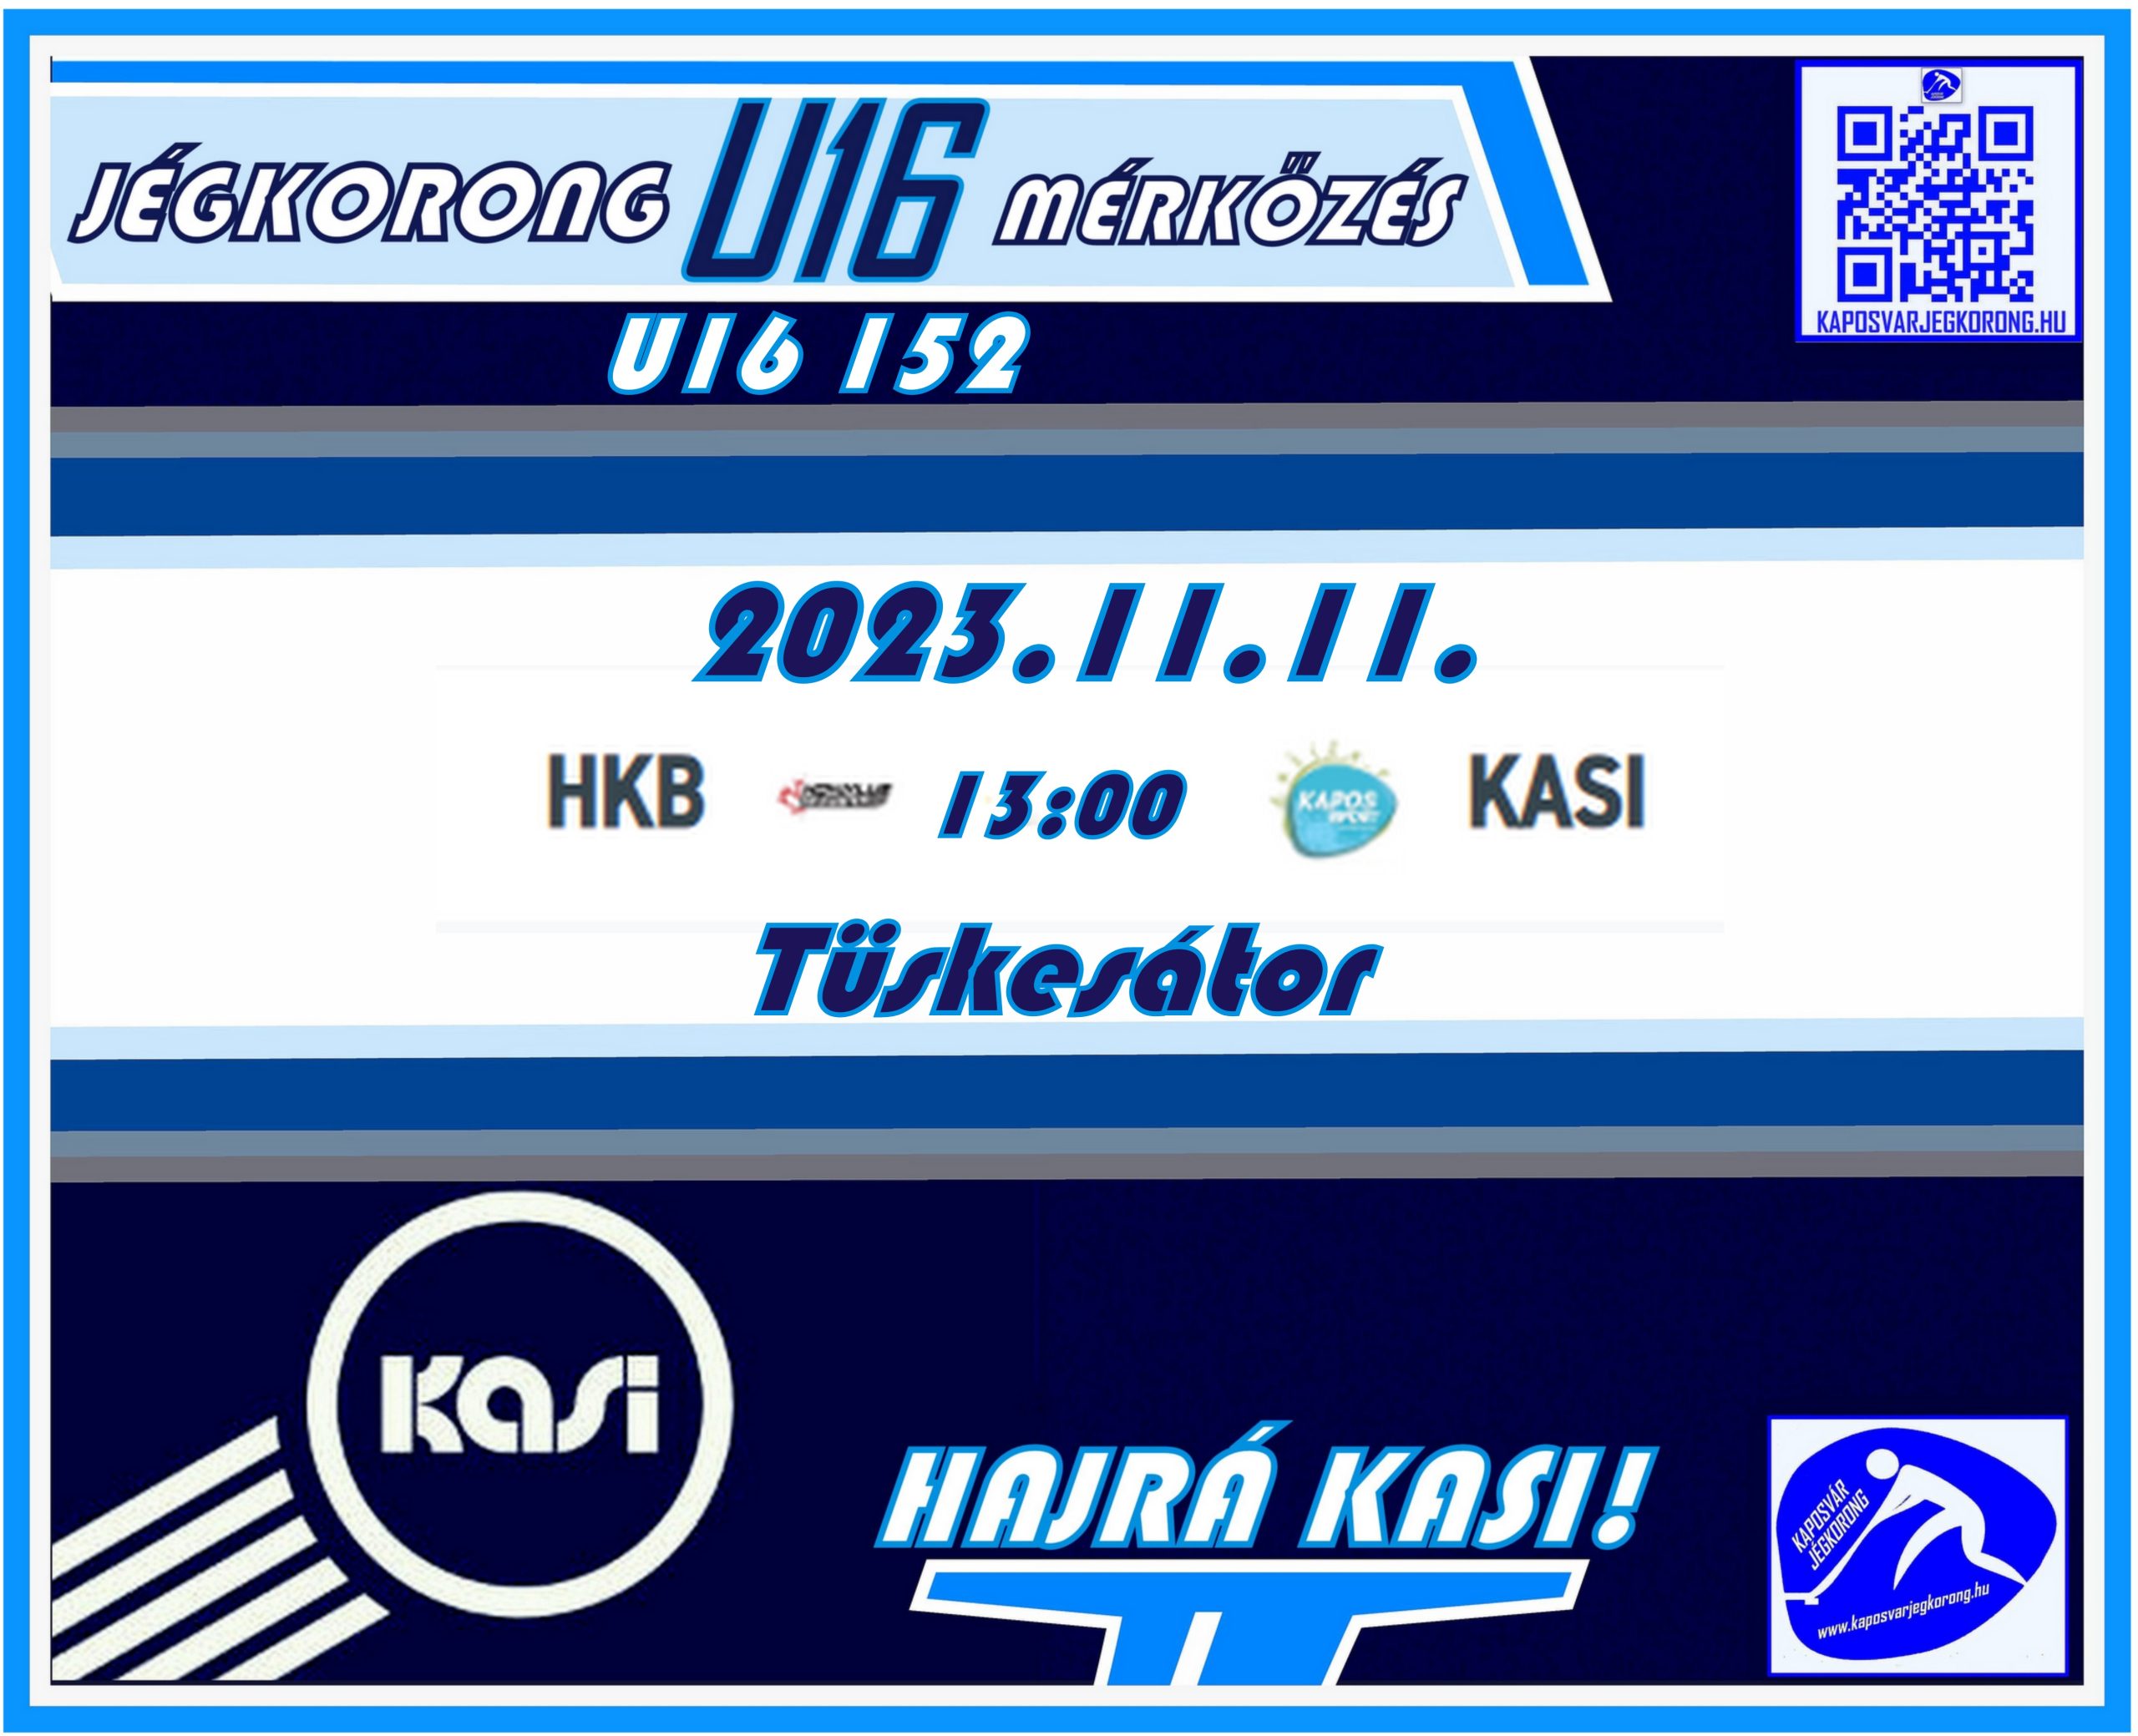 You are currently viewing U16 152 2023.11.11. szombat 13:00 Tüskesátor